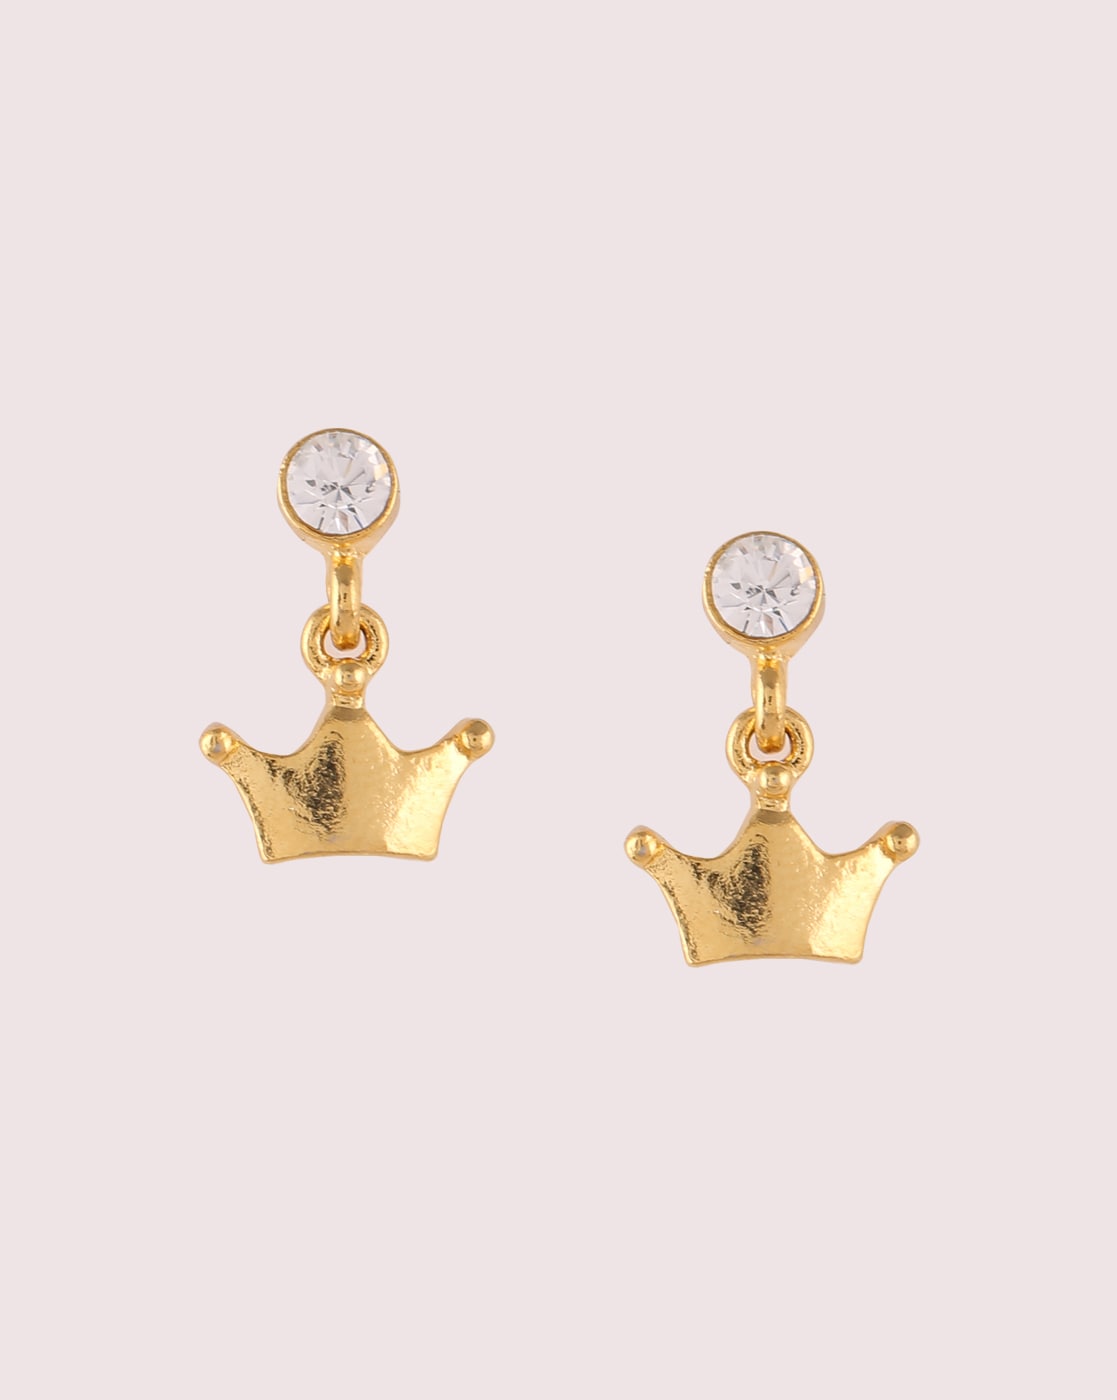 Crown Stud Earrings in 10K Gold | Banter